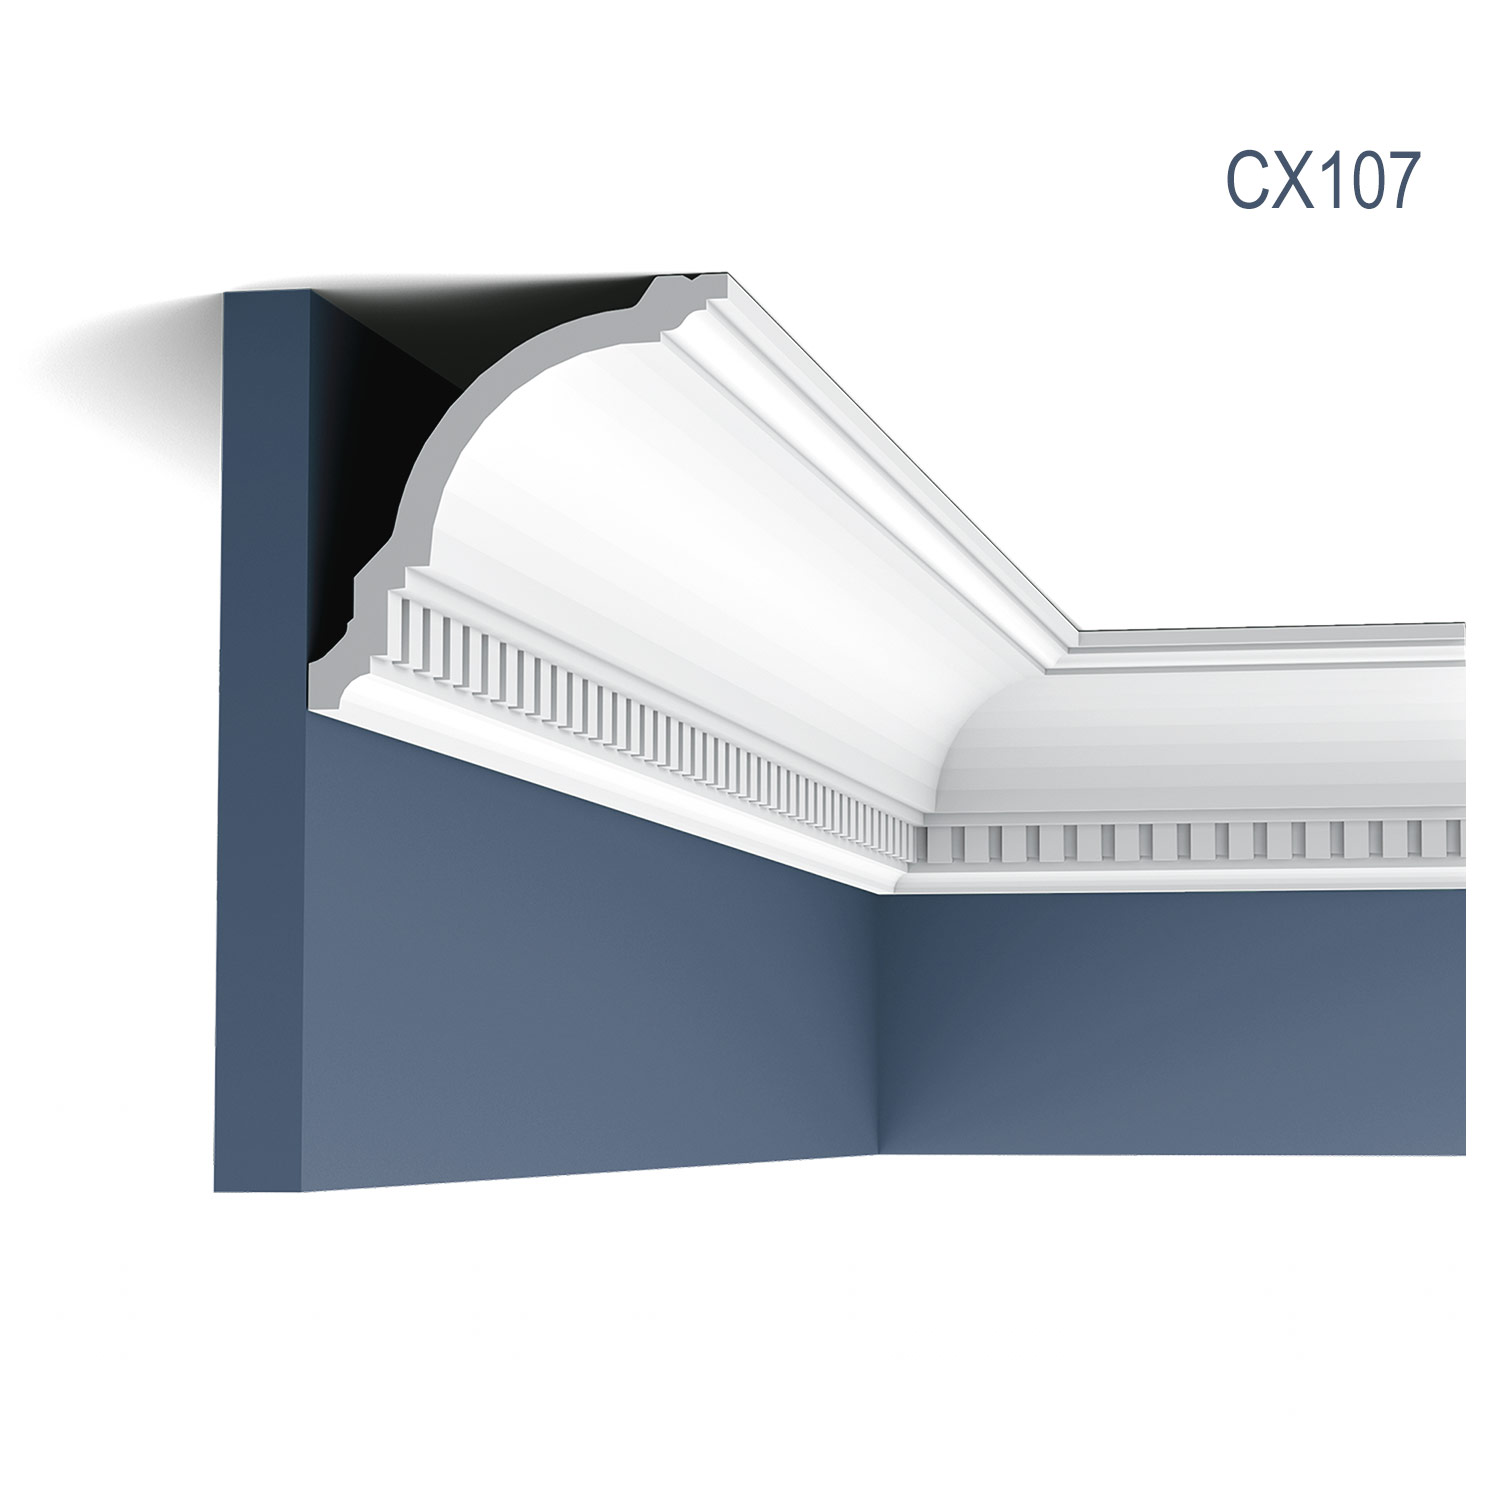 Cornisa CX107 pentru tavan, alba, vopsibila, rigida, calitate excelenta, Belgia, din Duropolimer, L 200 x H 11,7 x L 11,8 cm